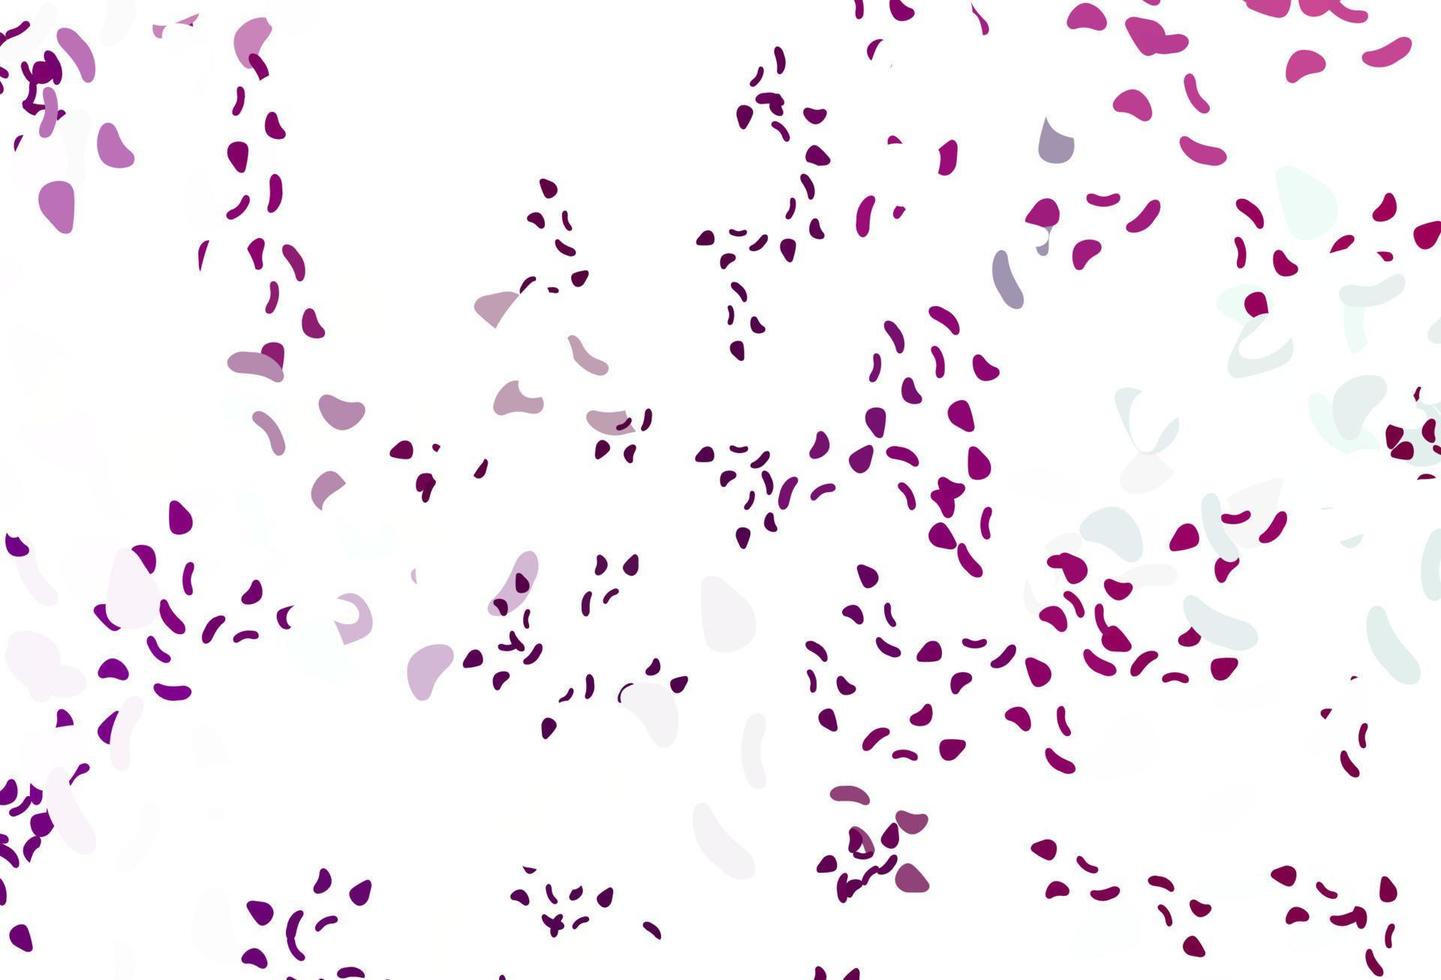 textura de vector púrpura claro con formas aleatorias.